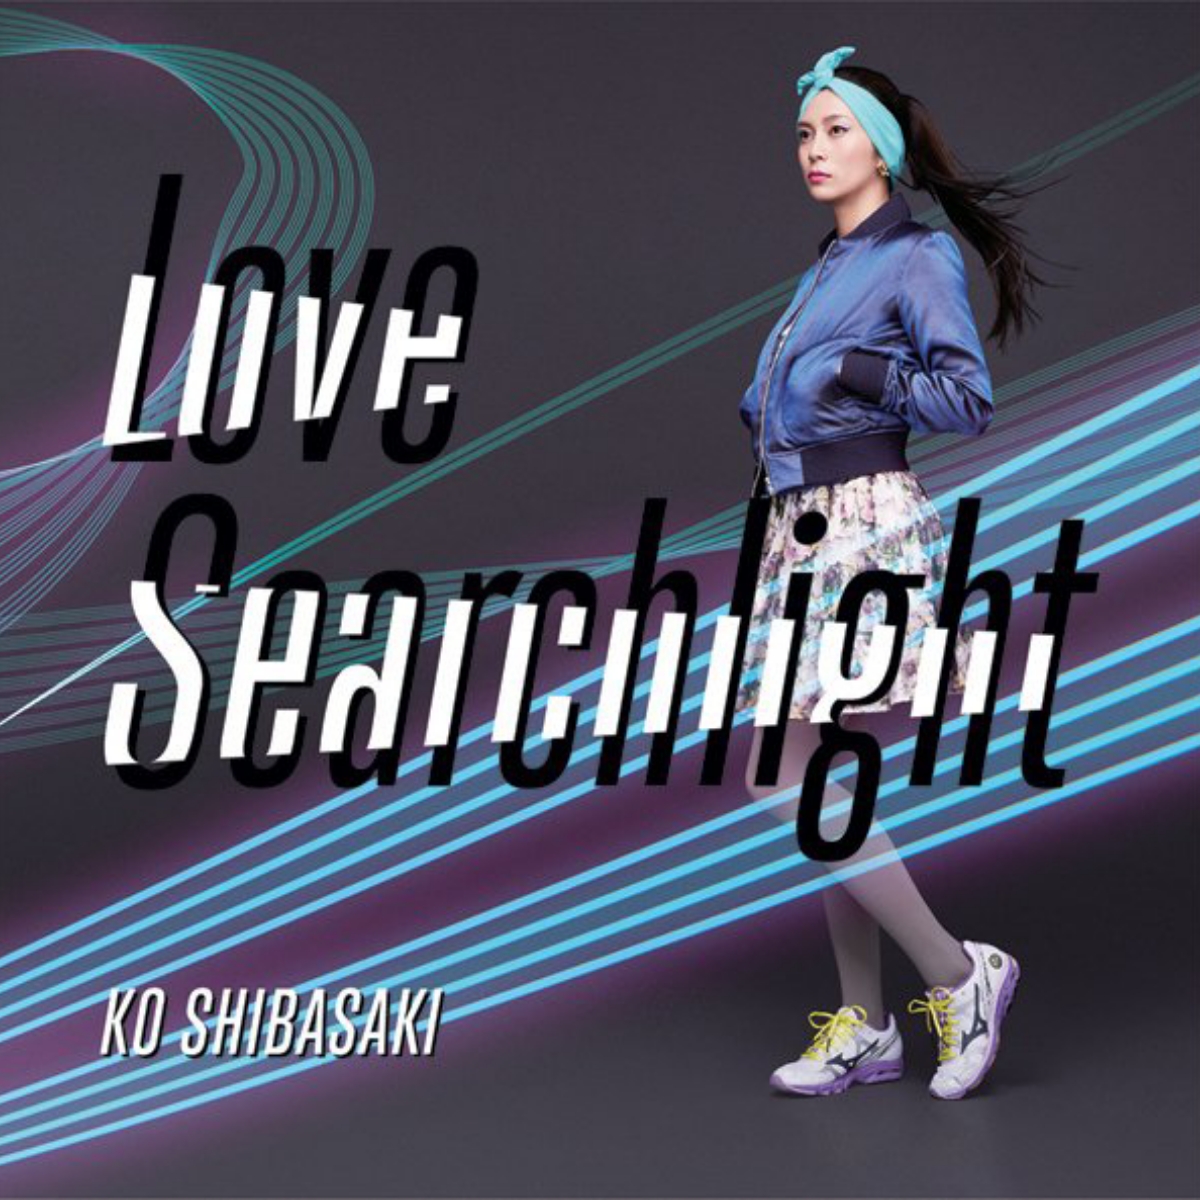 Kou Shibasaki - Love Searchlight